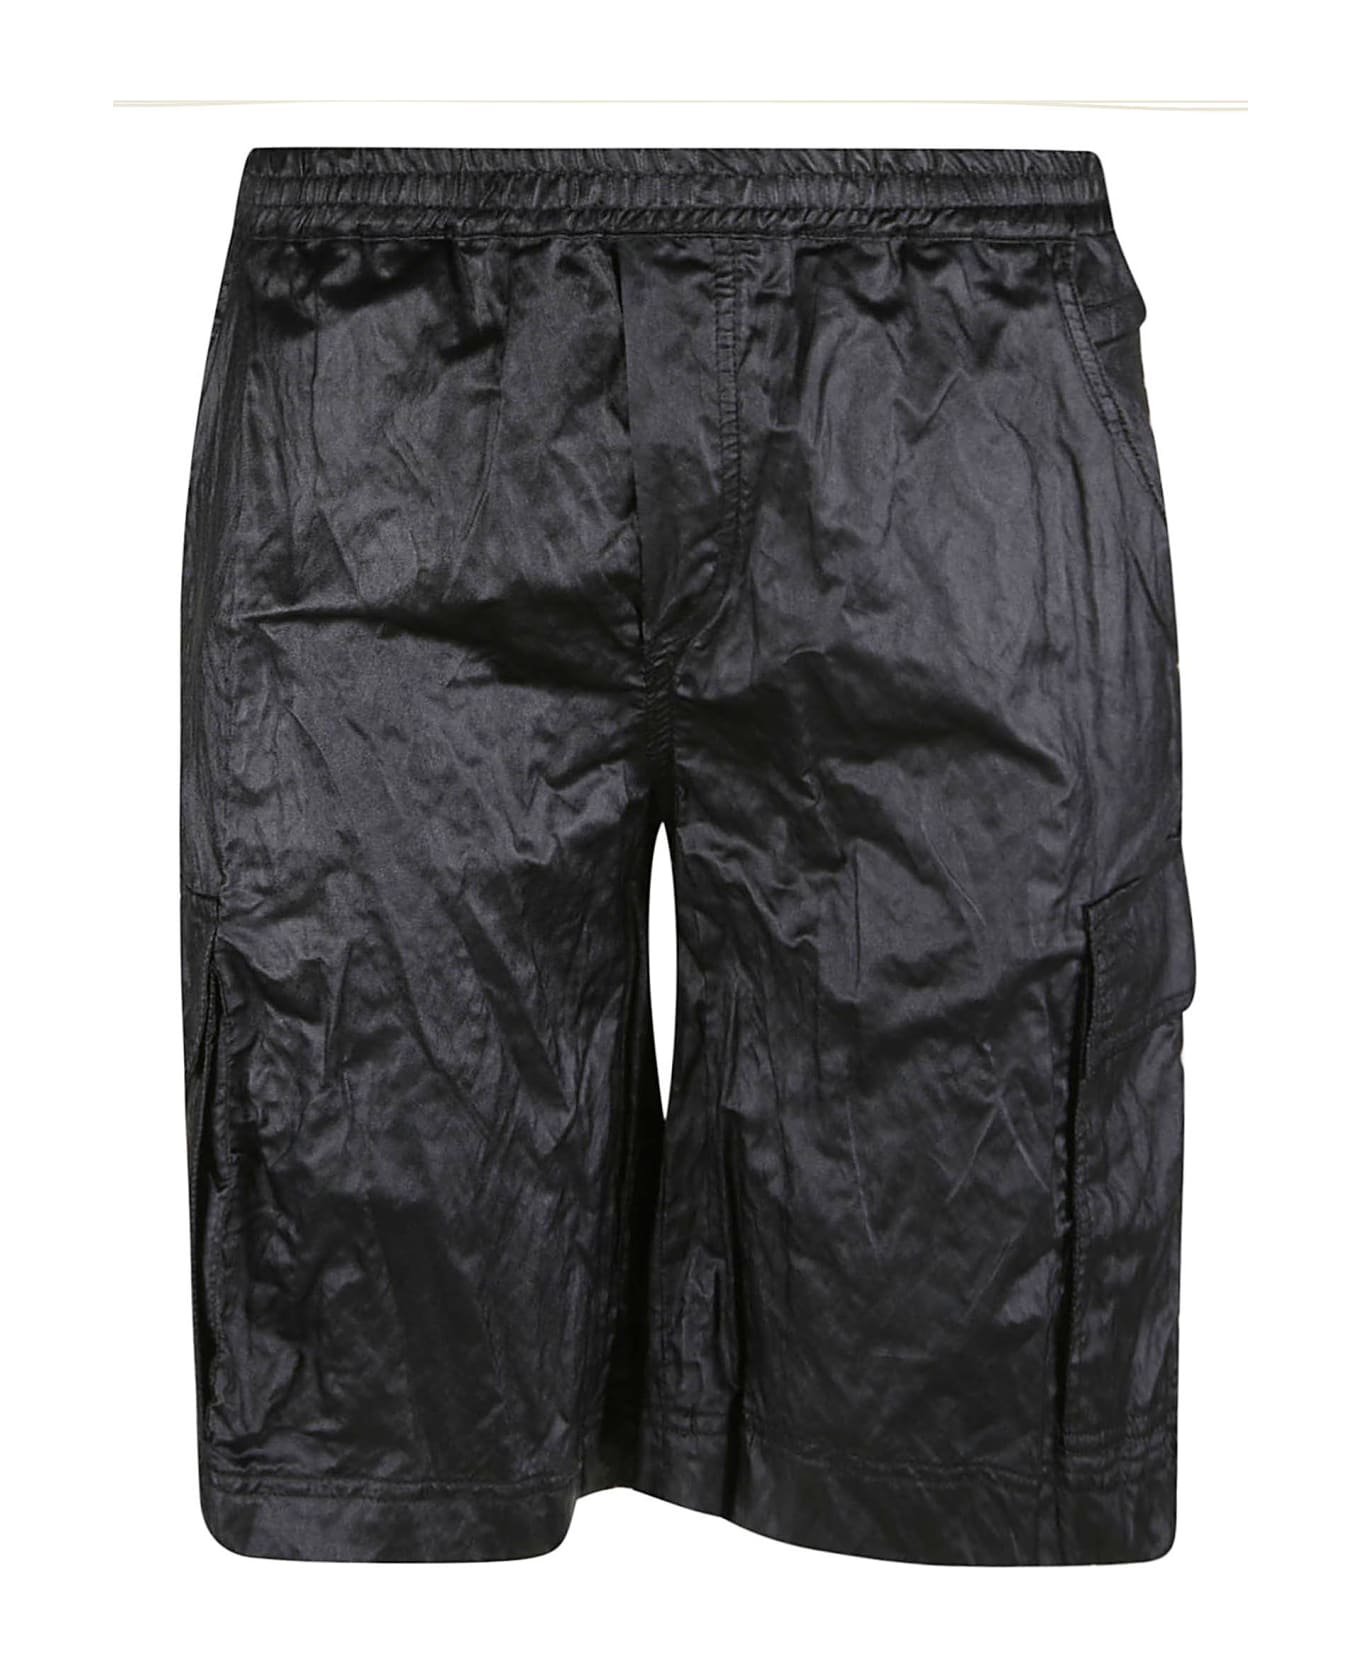 44 Label Group Cargo Ribbed Shorts - Black ショートパンツ